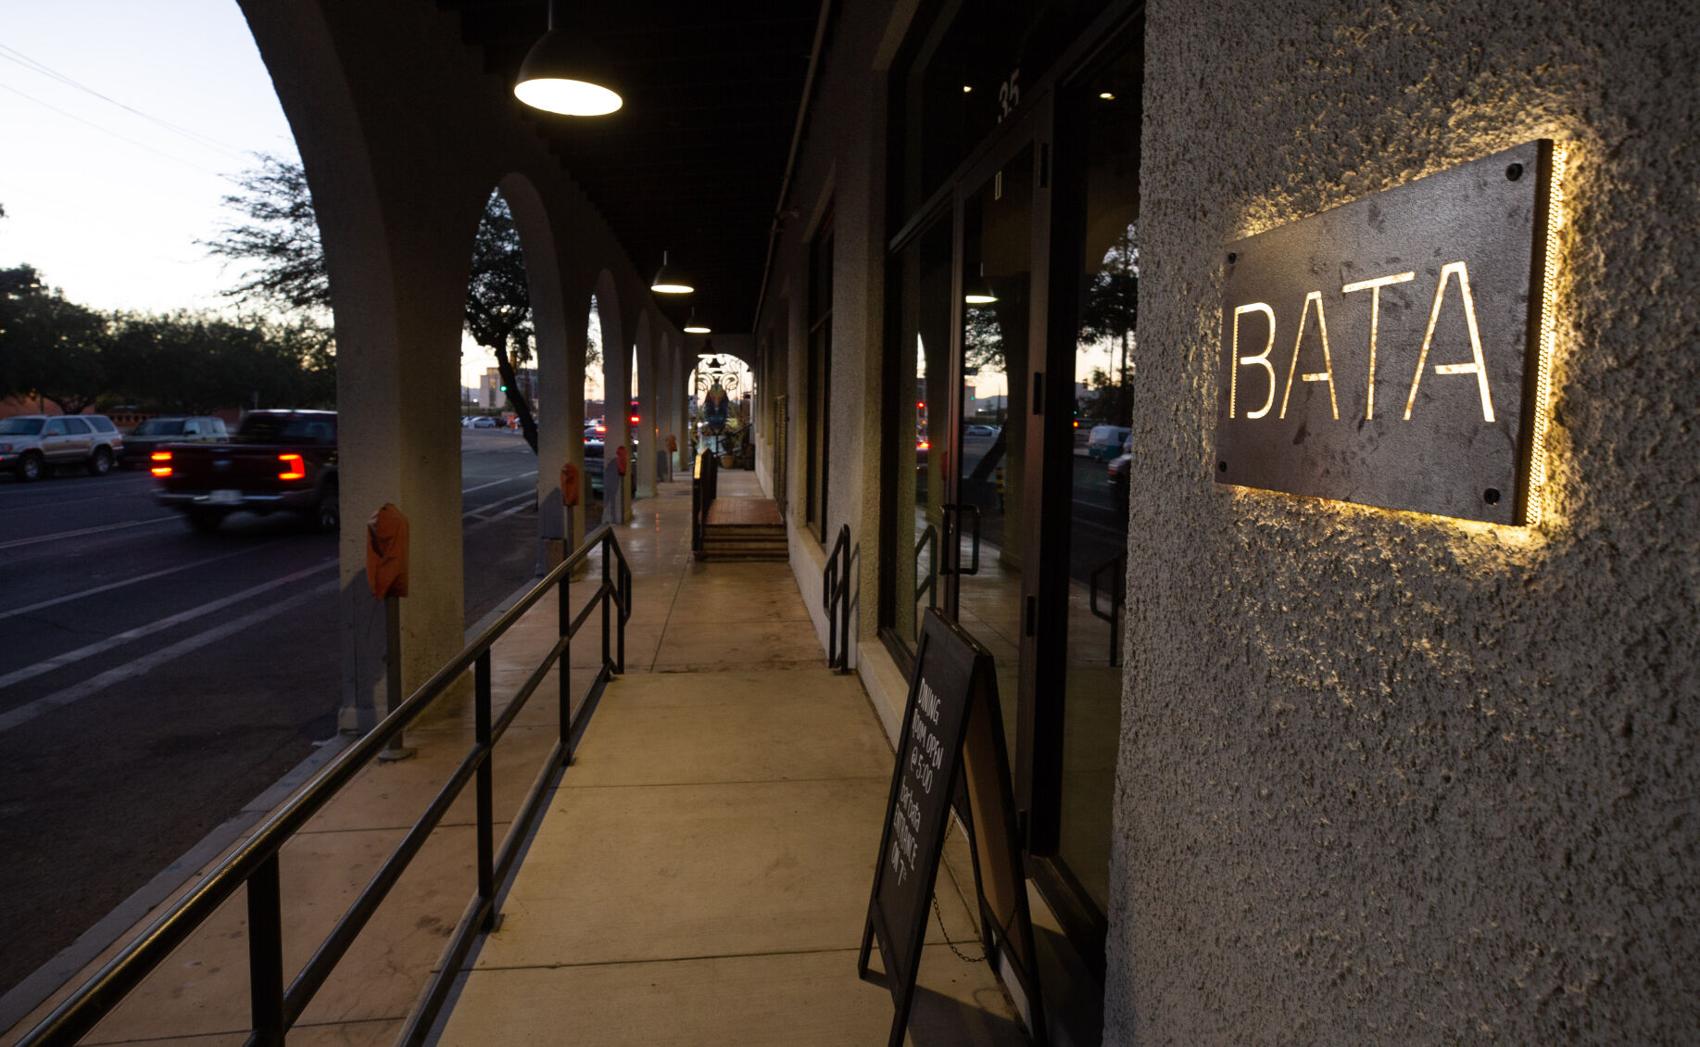 This awardwinning Tucson restaurant has opened a basement bar